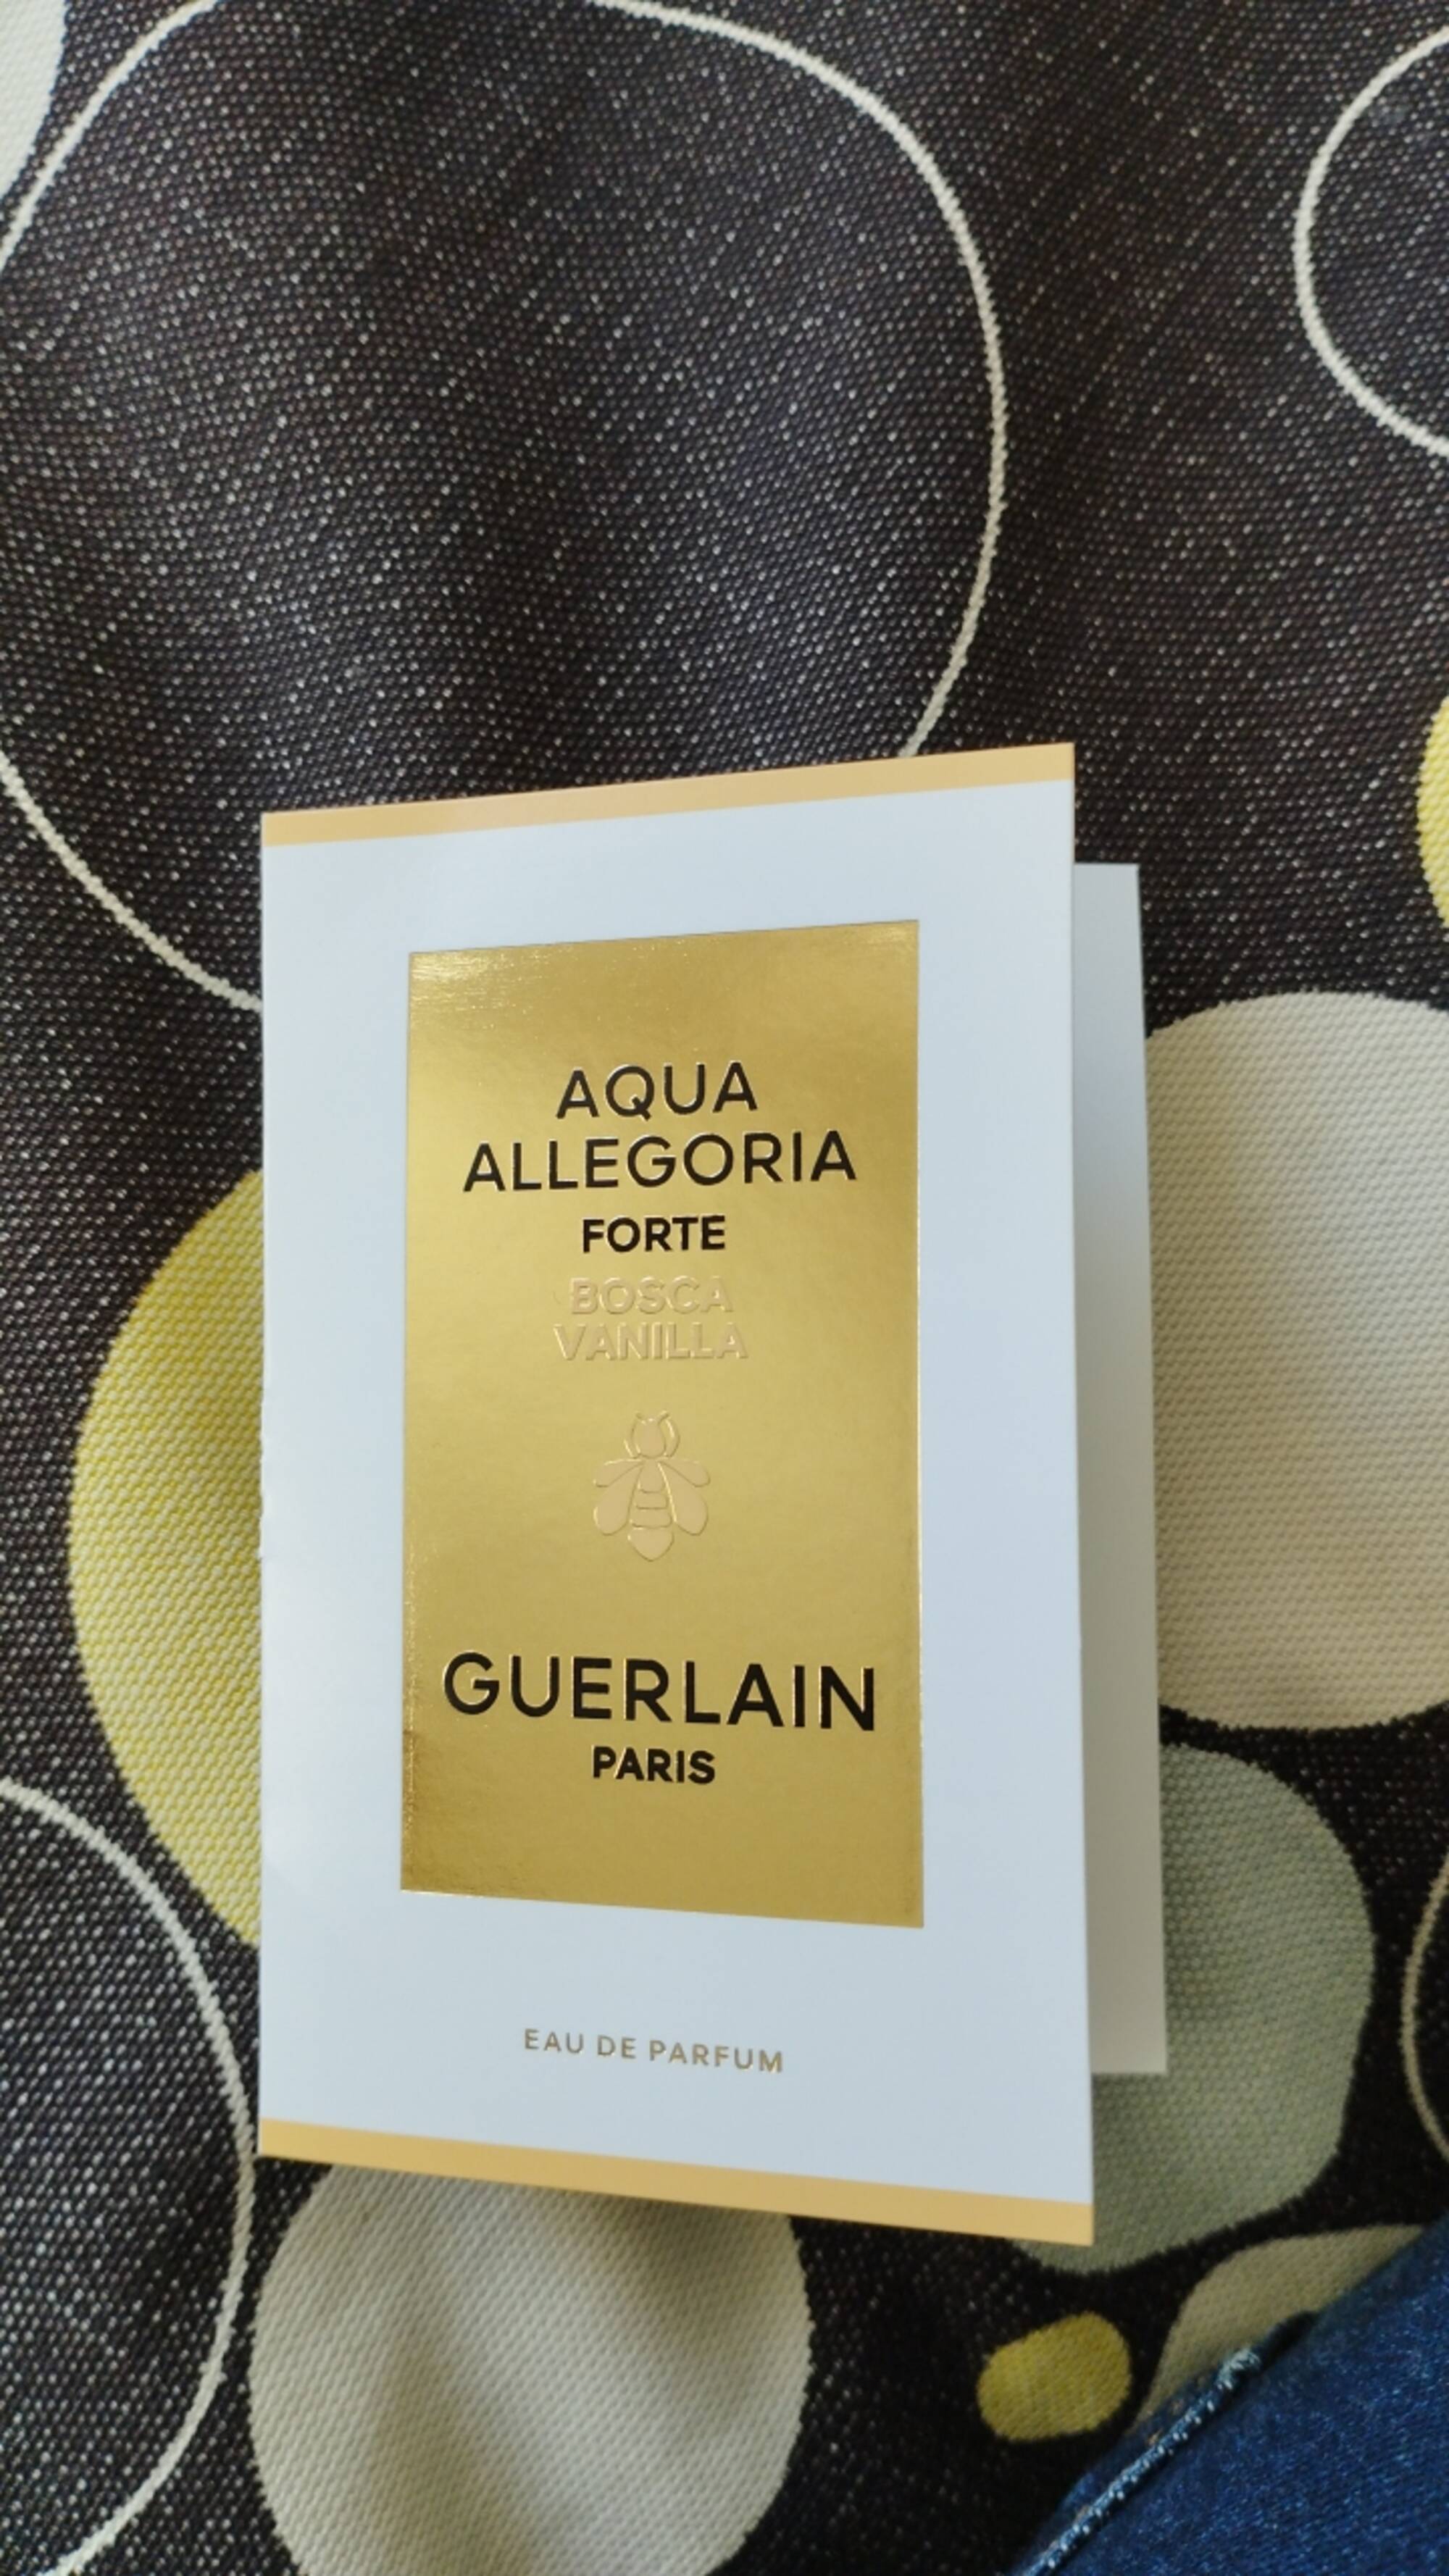 GUERLAIN - Aqua allegoria forte